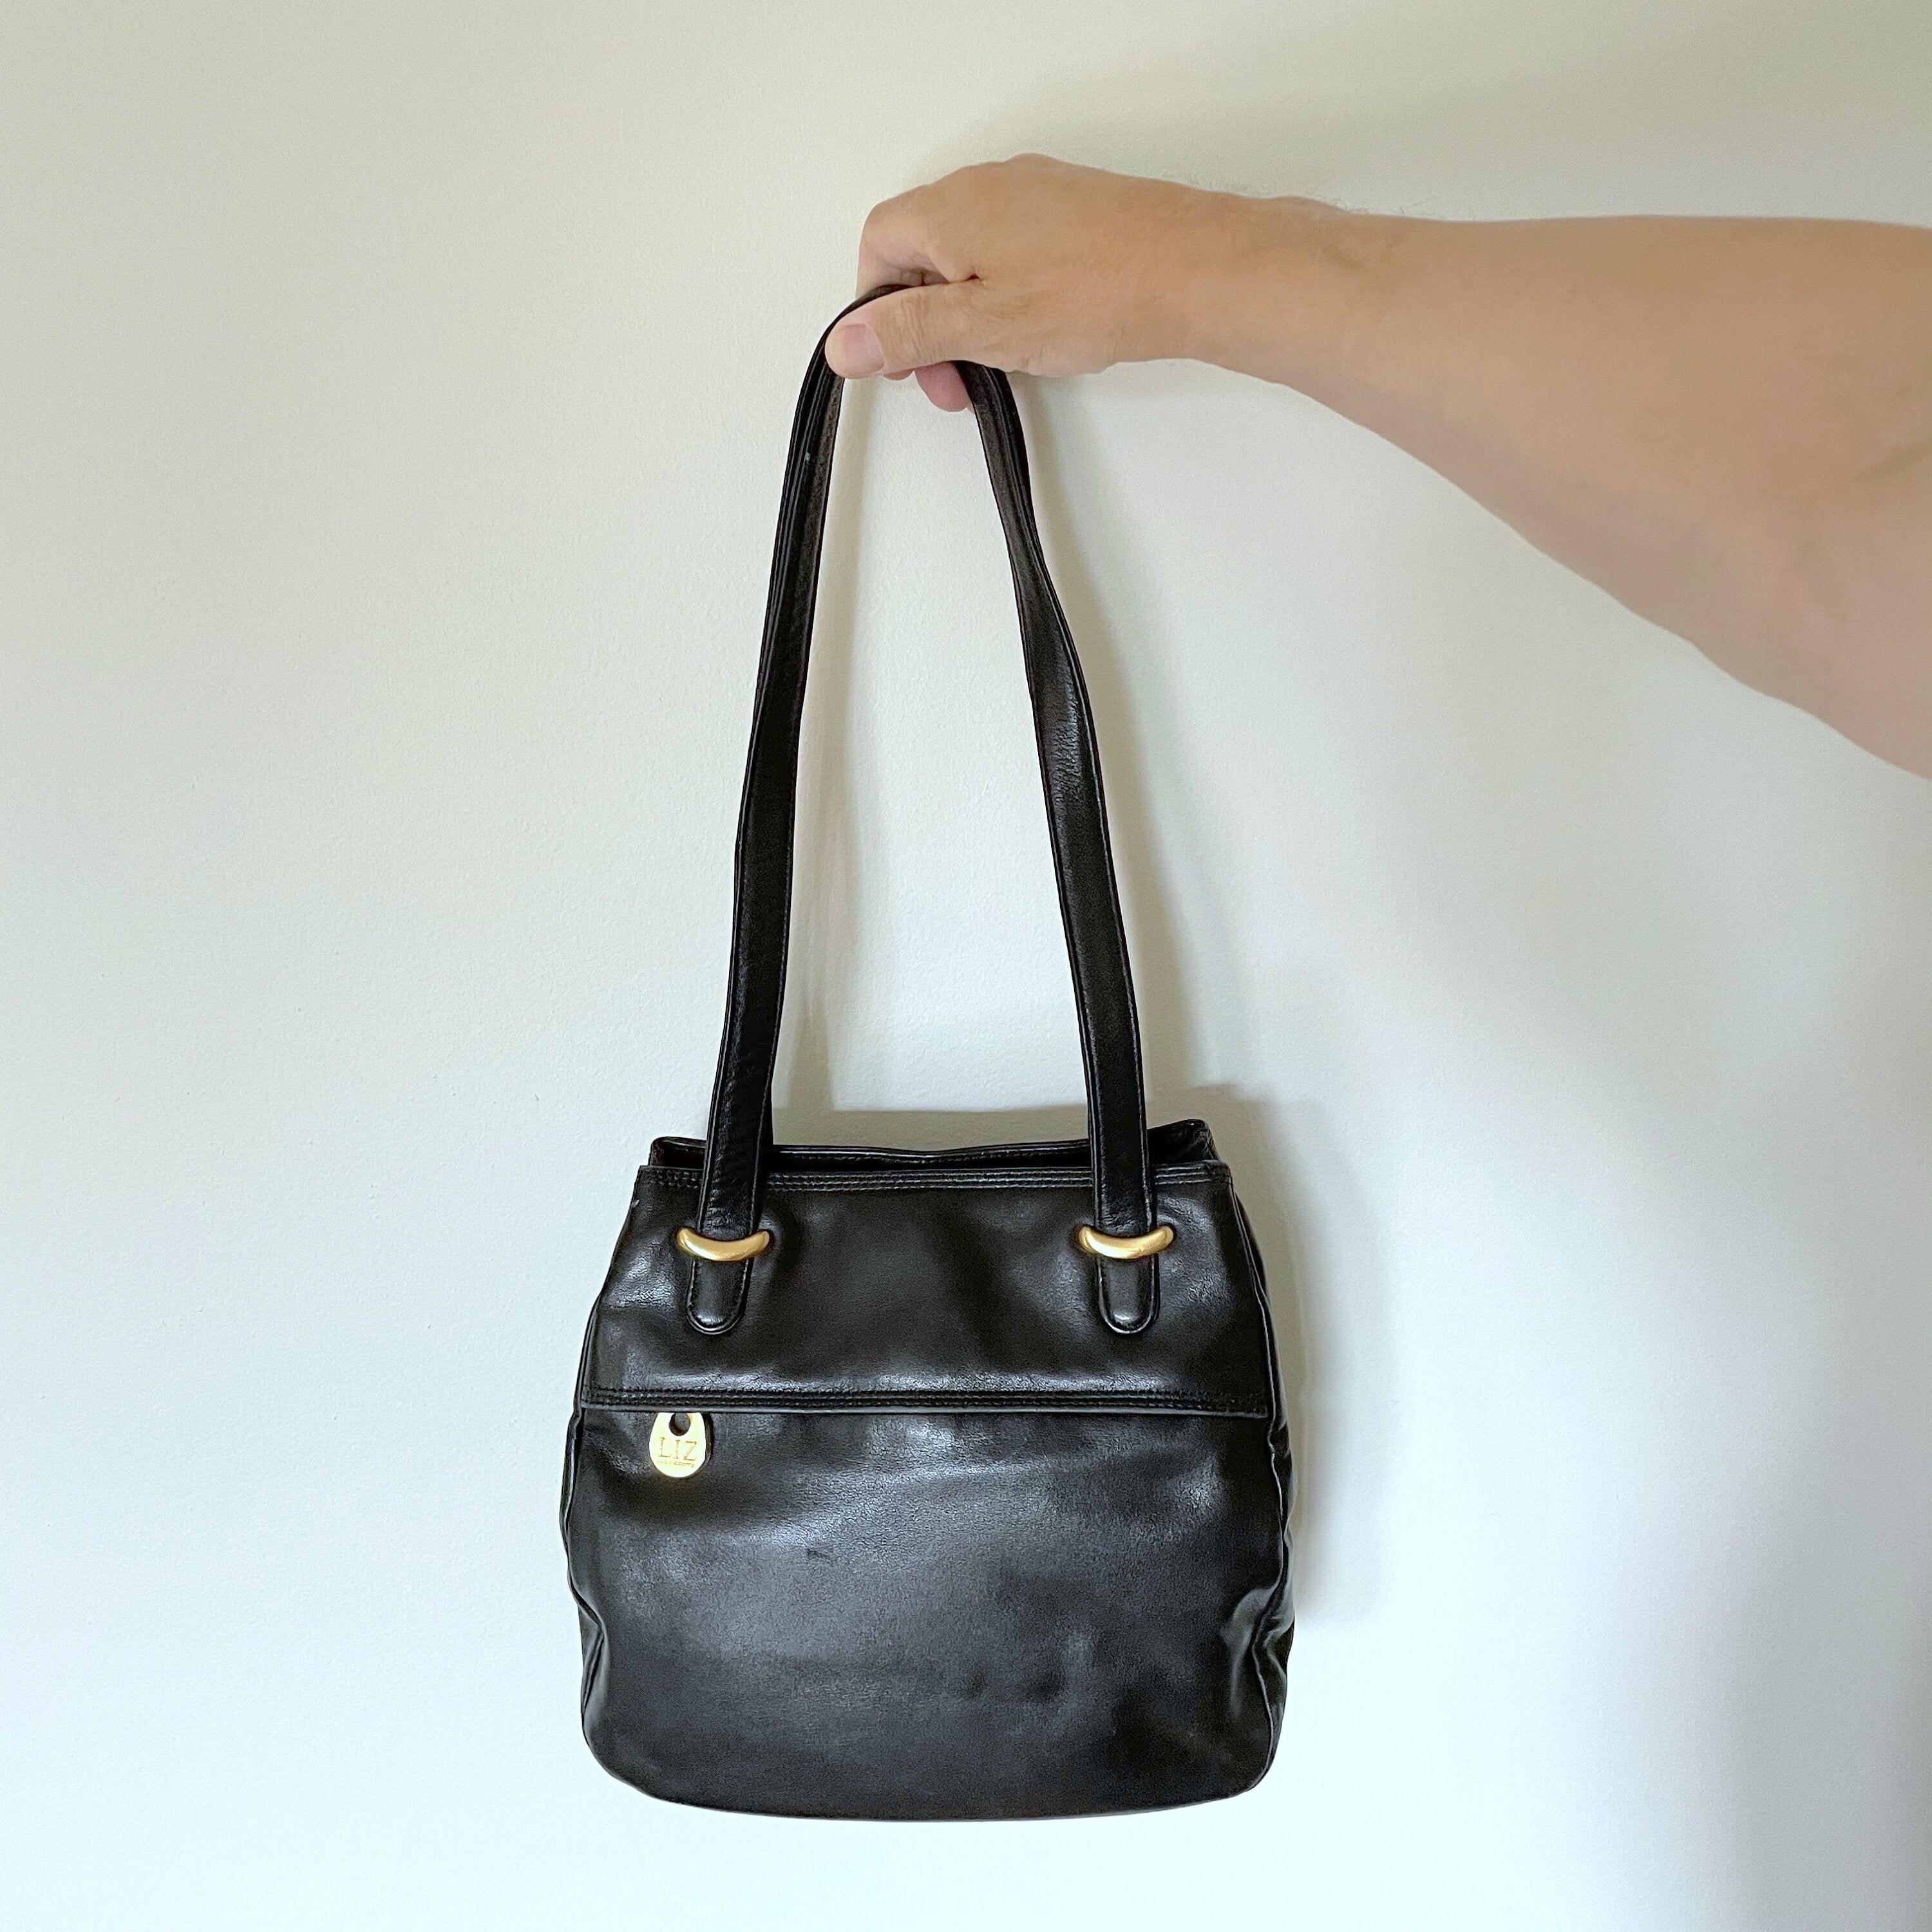 Liz Claiborne purse Black - $10 - From mads